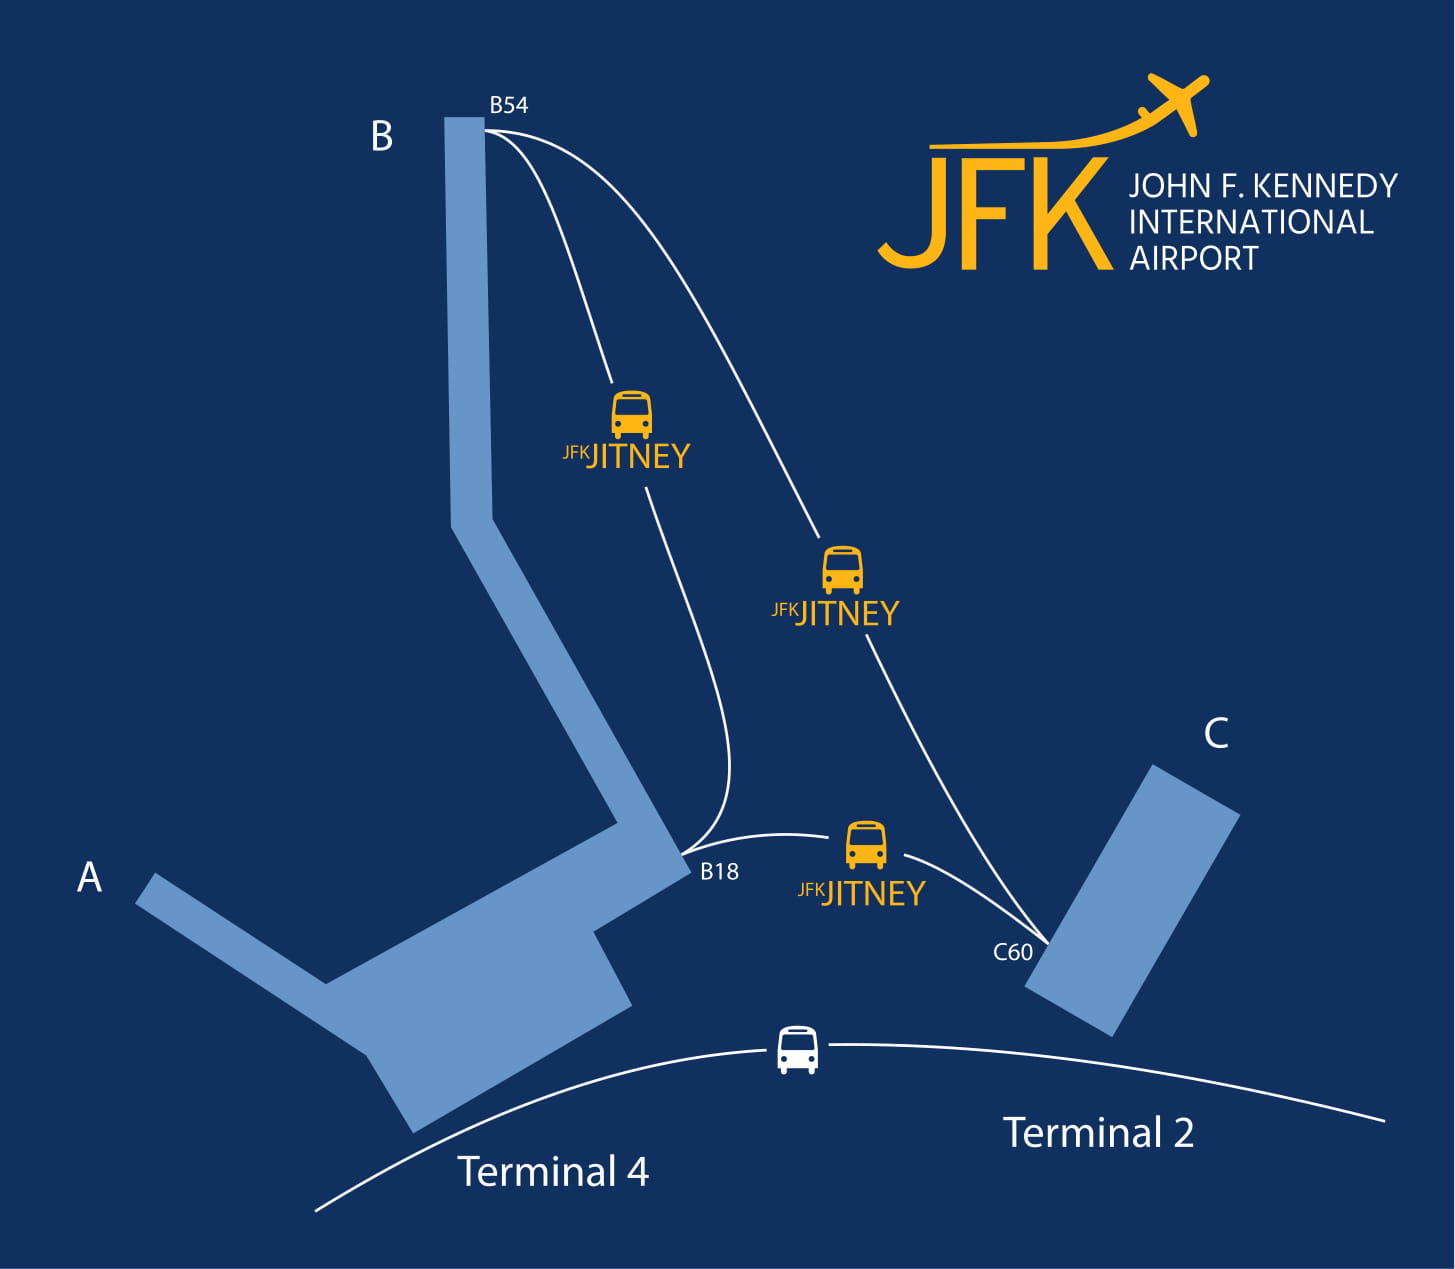 arrive before international flight jfk